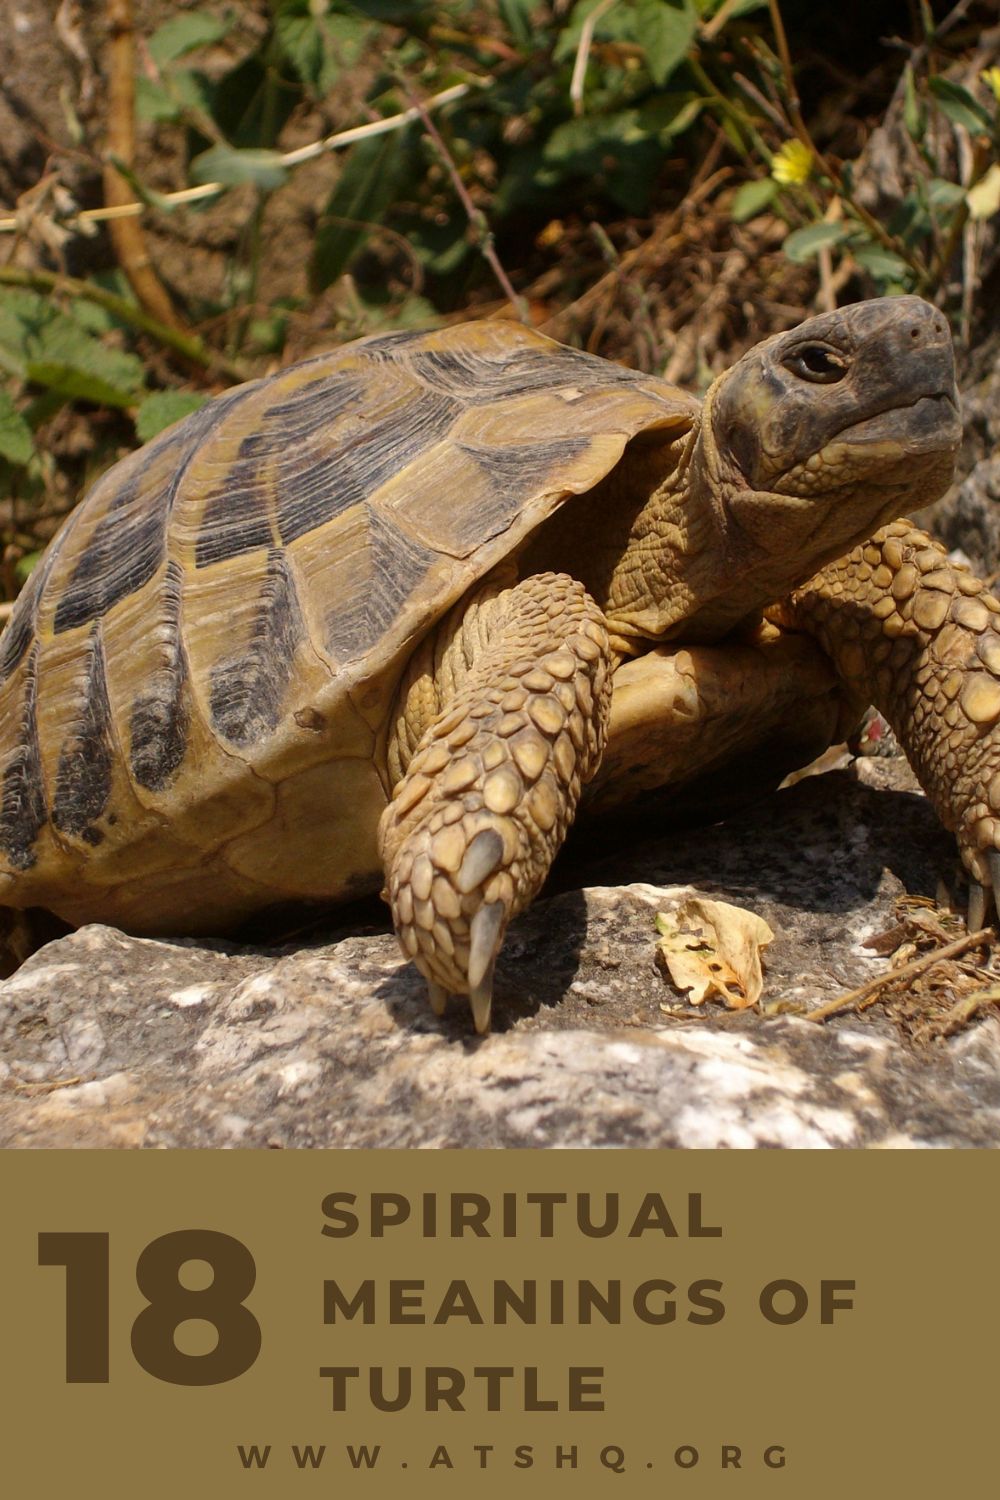 Turtle Symbolism: 18 Spiritual Meanings Of Turtle